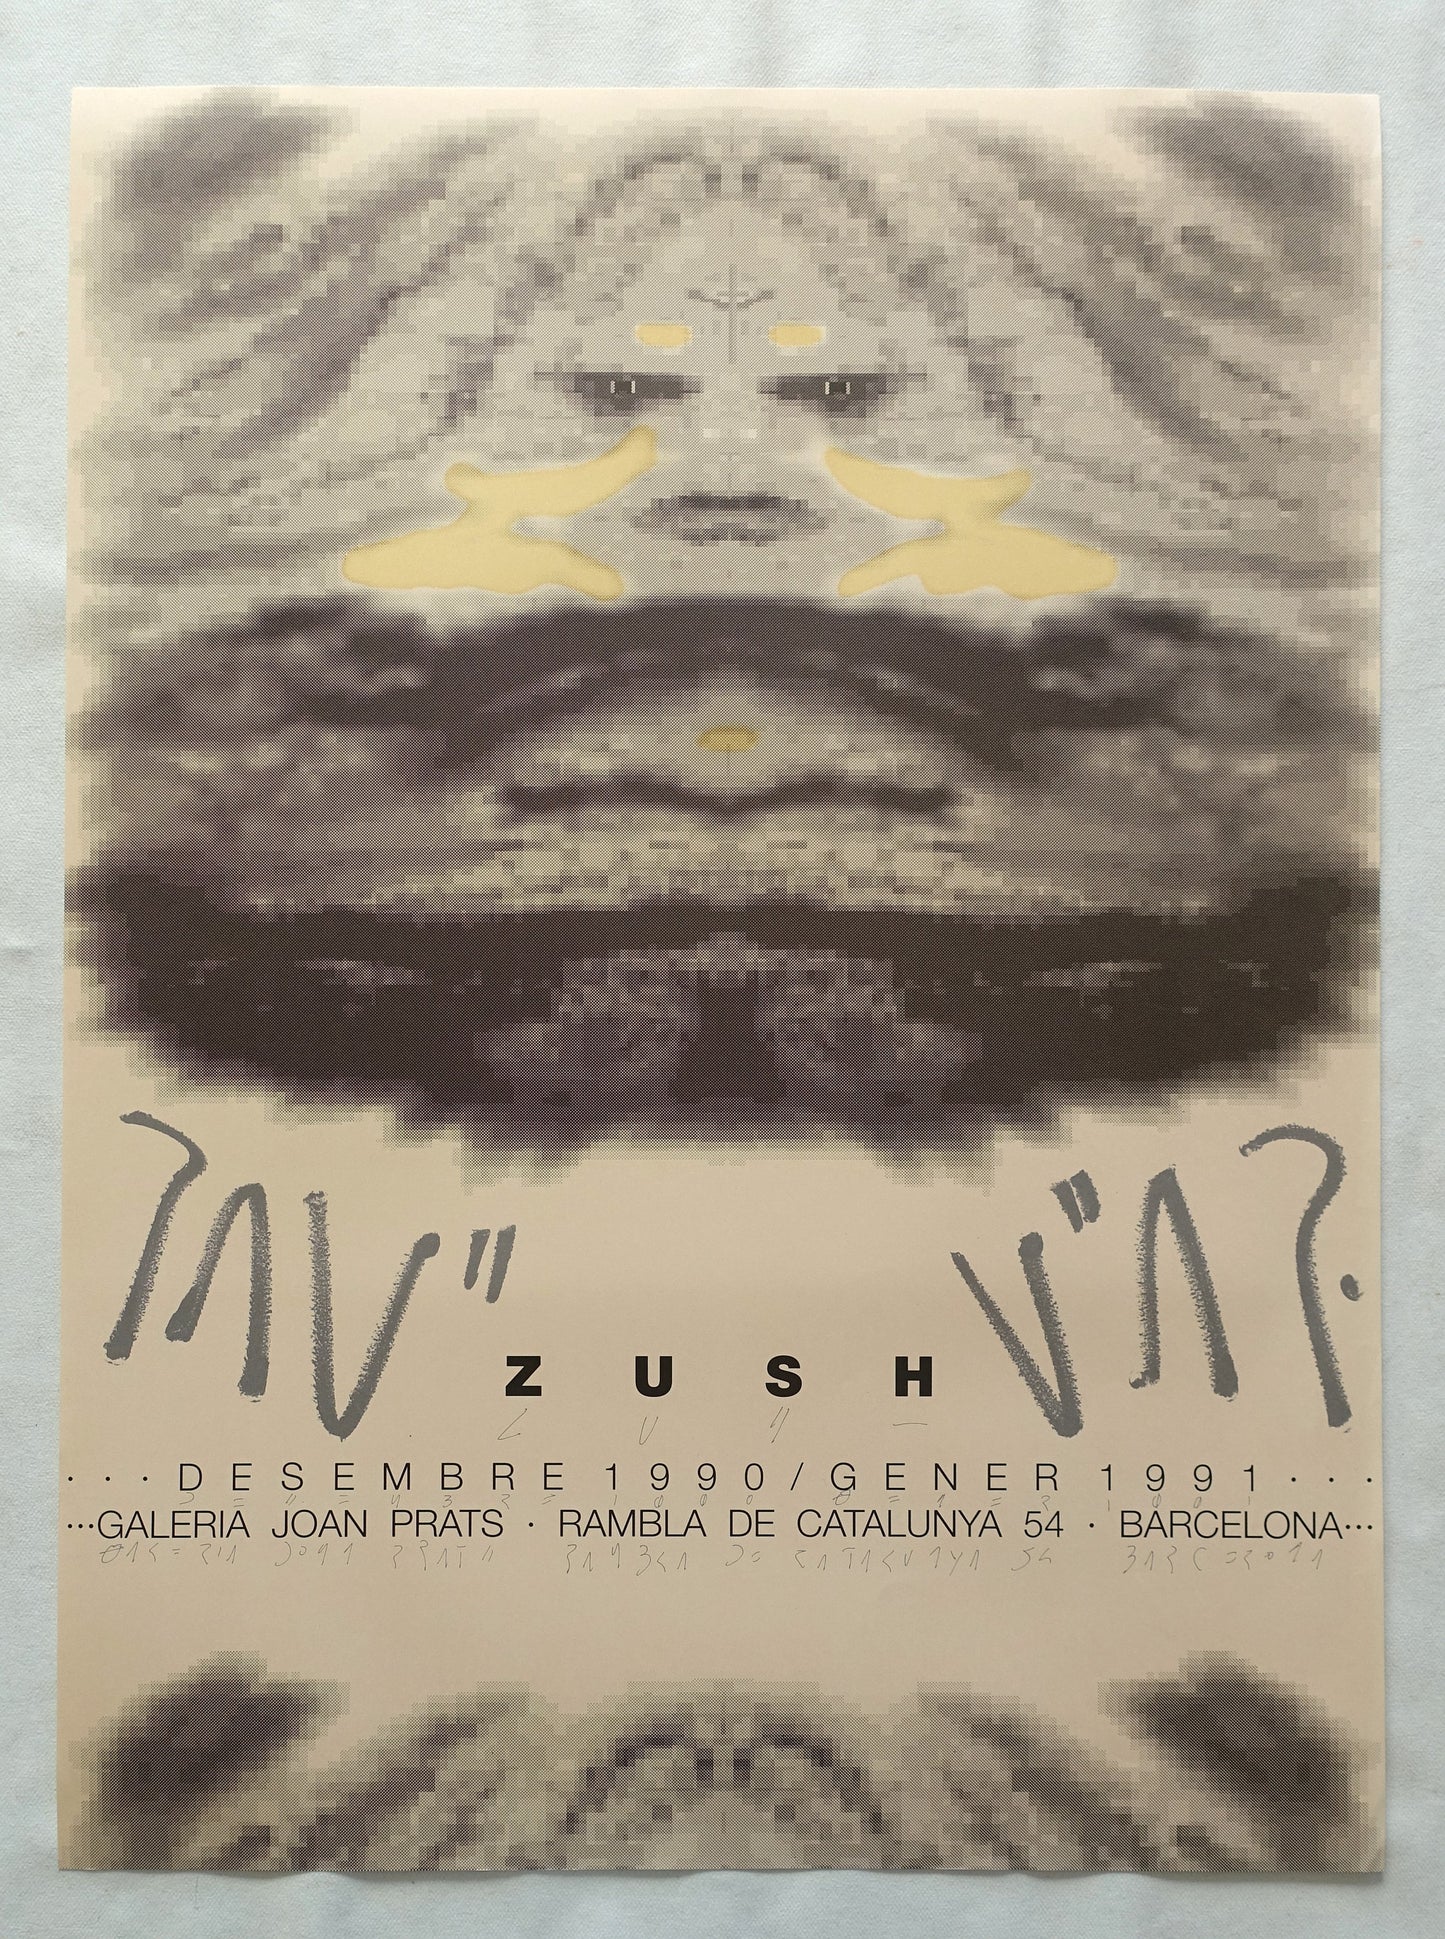 1991 Zush Spanish Exhibition Poster - Original Vintage Poster